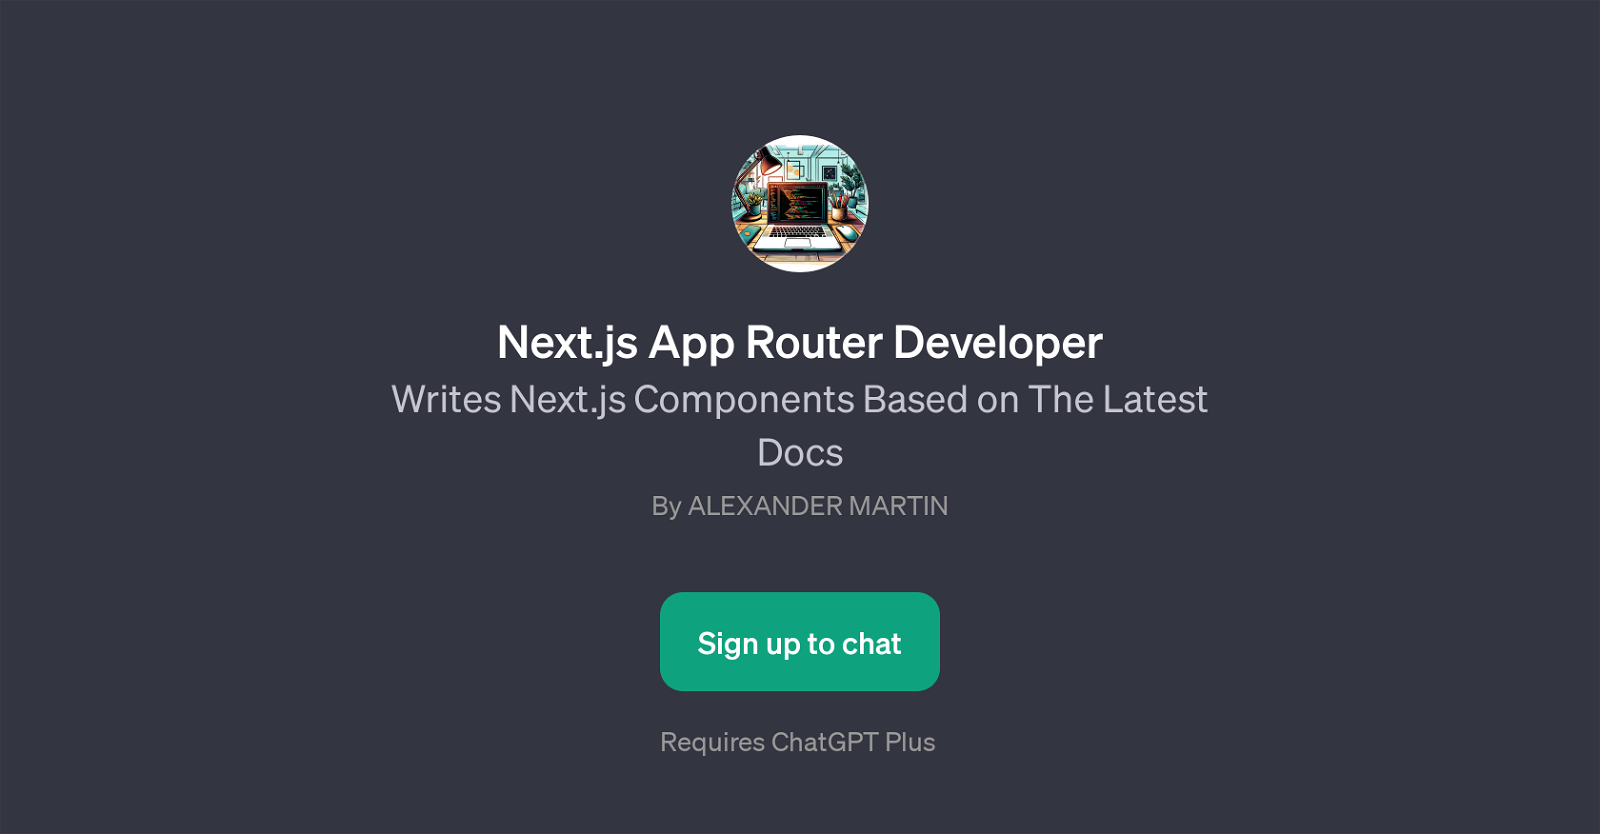 Next.js App Router Developer website